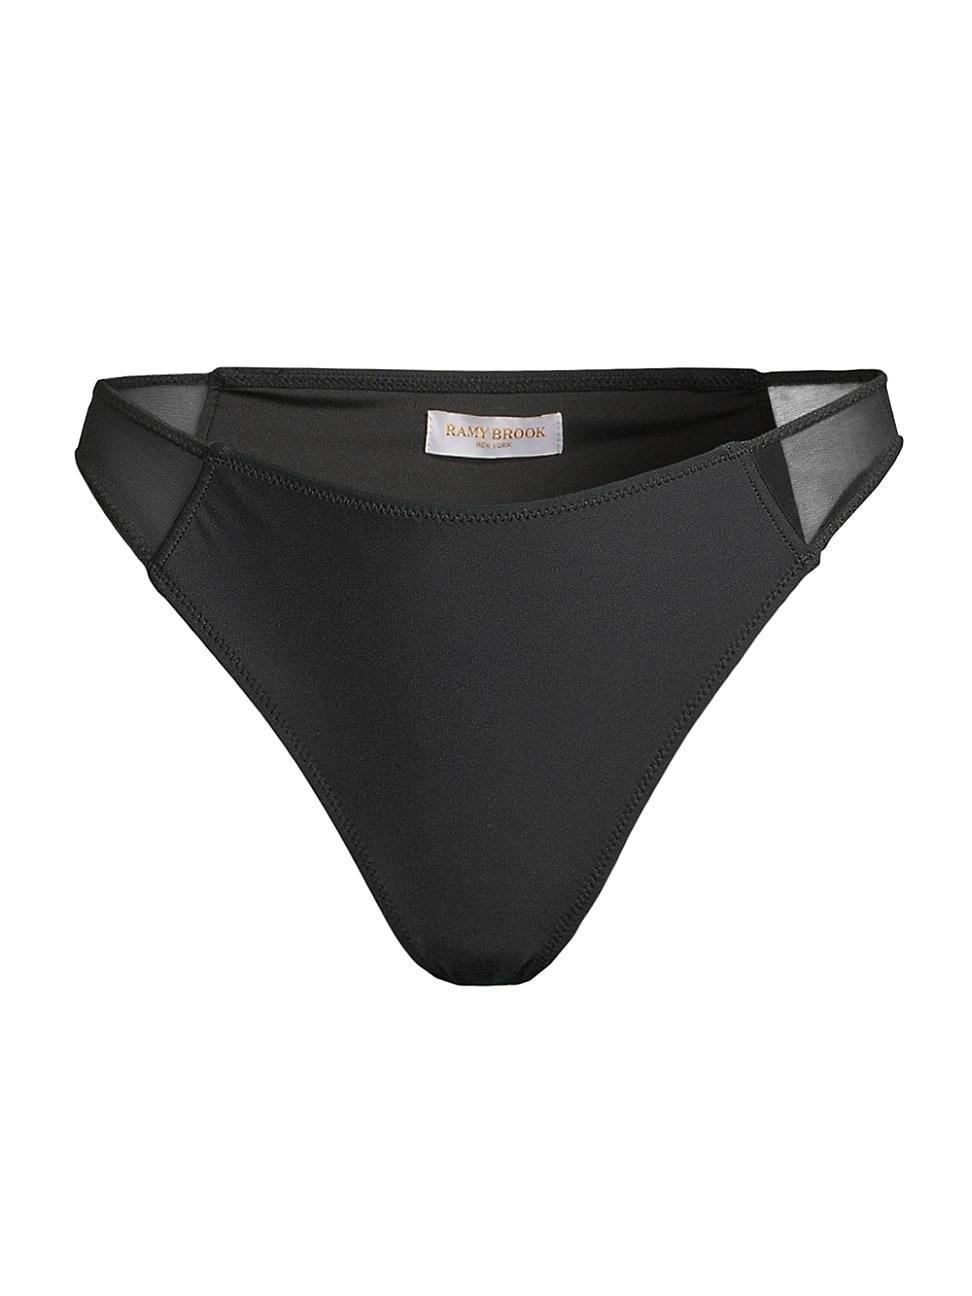 Ramy Brook Ensley Mesh Inset Bikini Bottoms Product Image